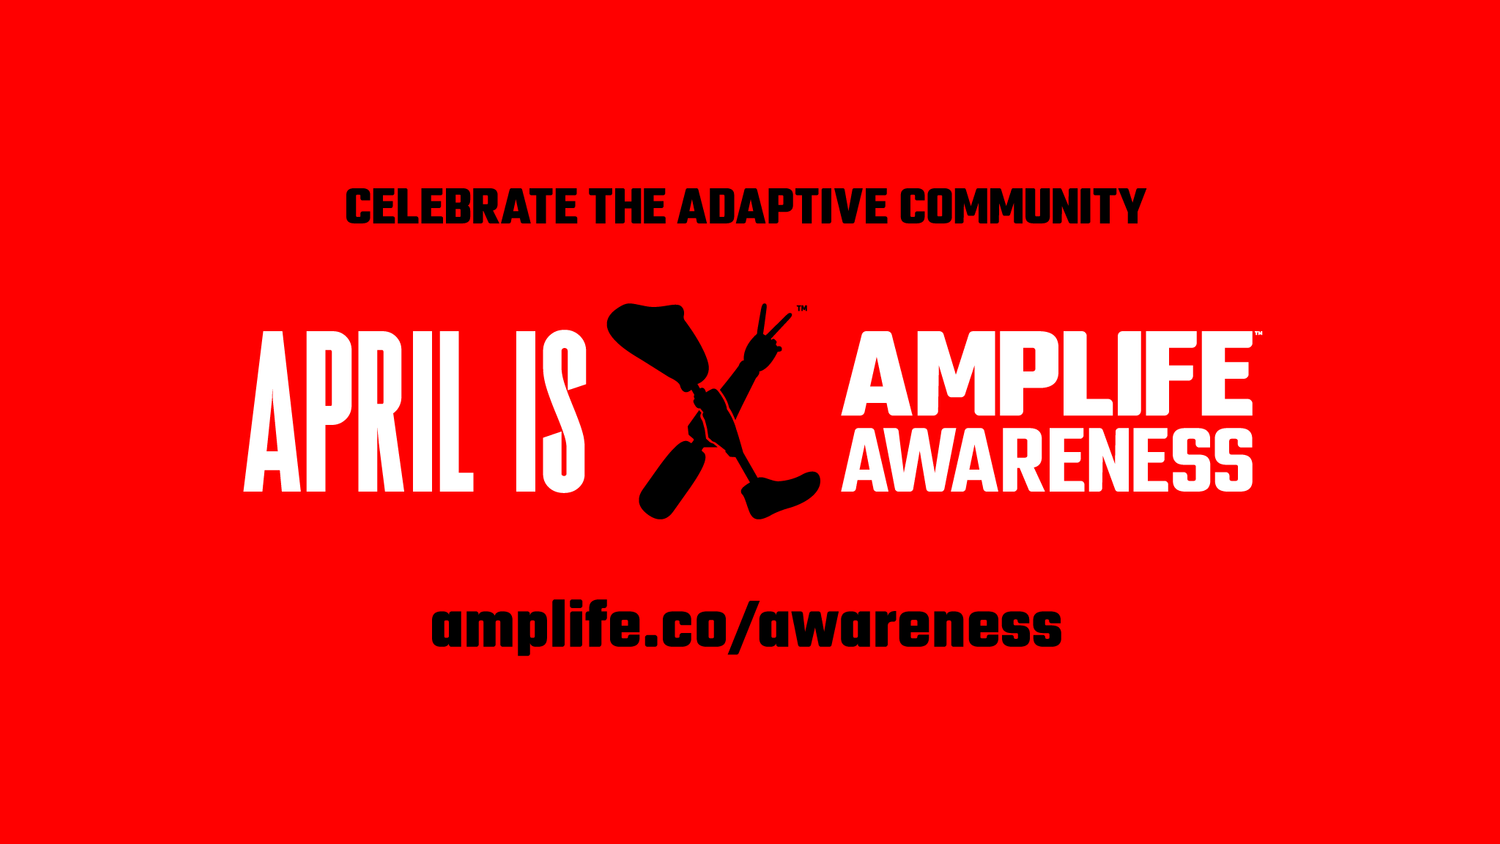 CELEBRATE THE ADAPTIVE COMMUNITY. APRIL IS AMPLIFE AWARENESS